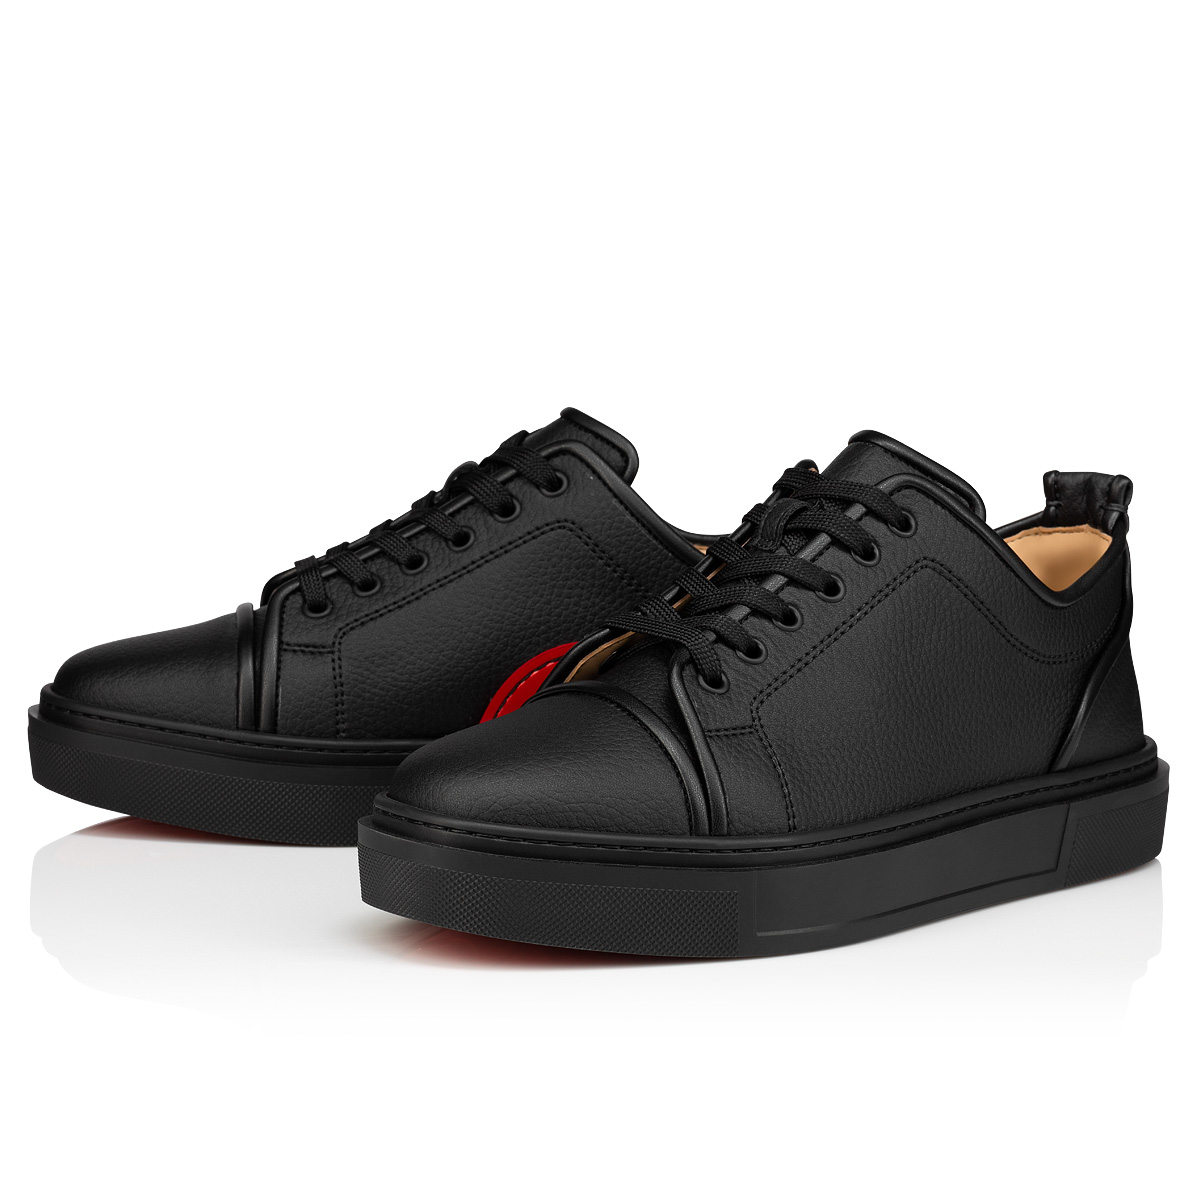 Christian Louboutin Adolon Junior Leather Sneakers